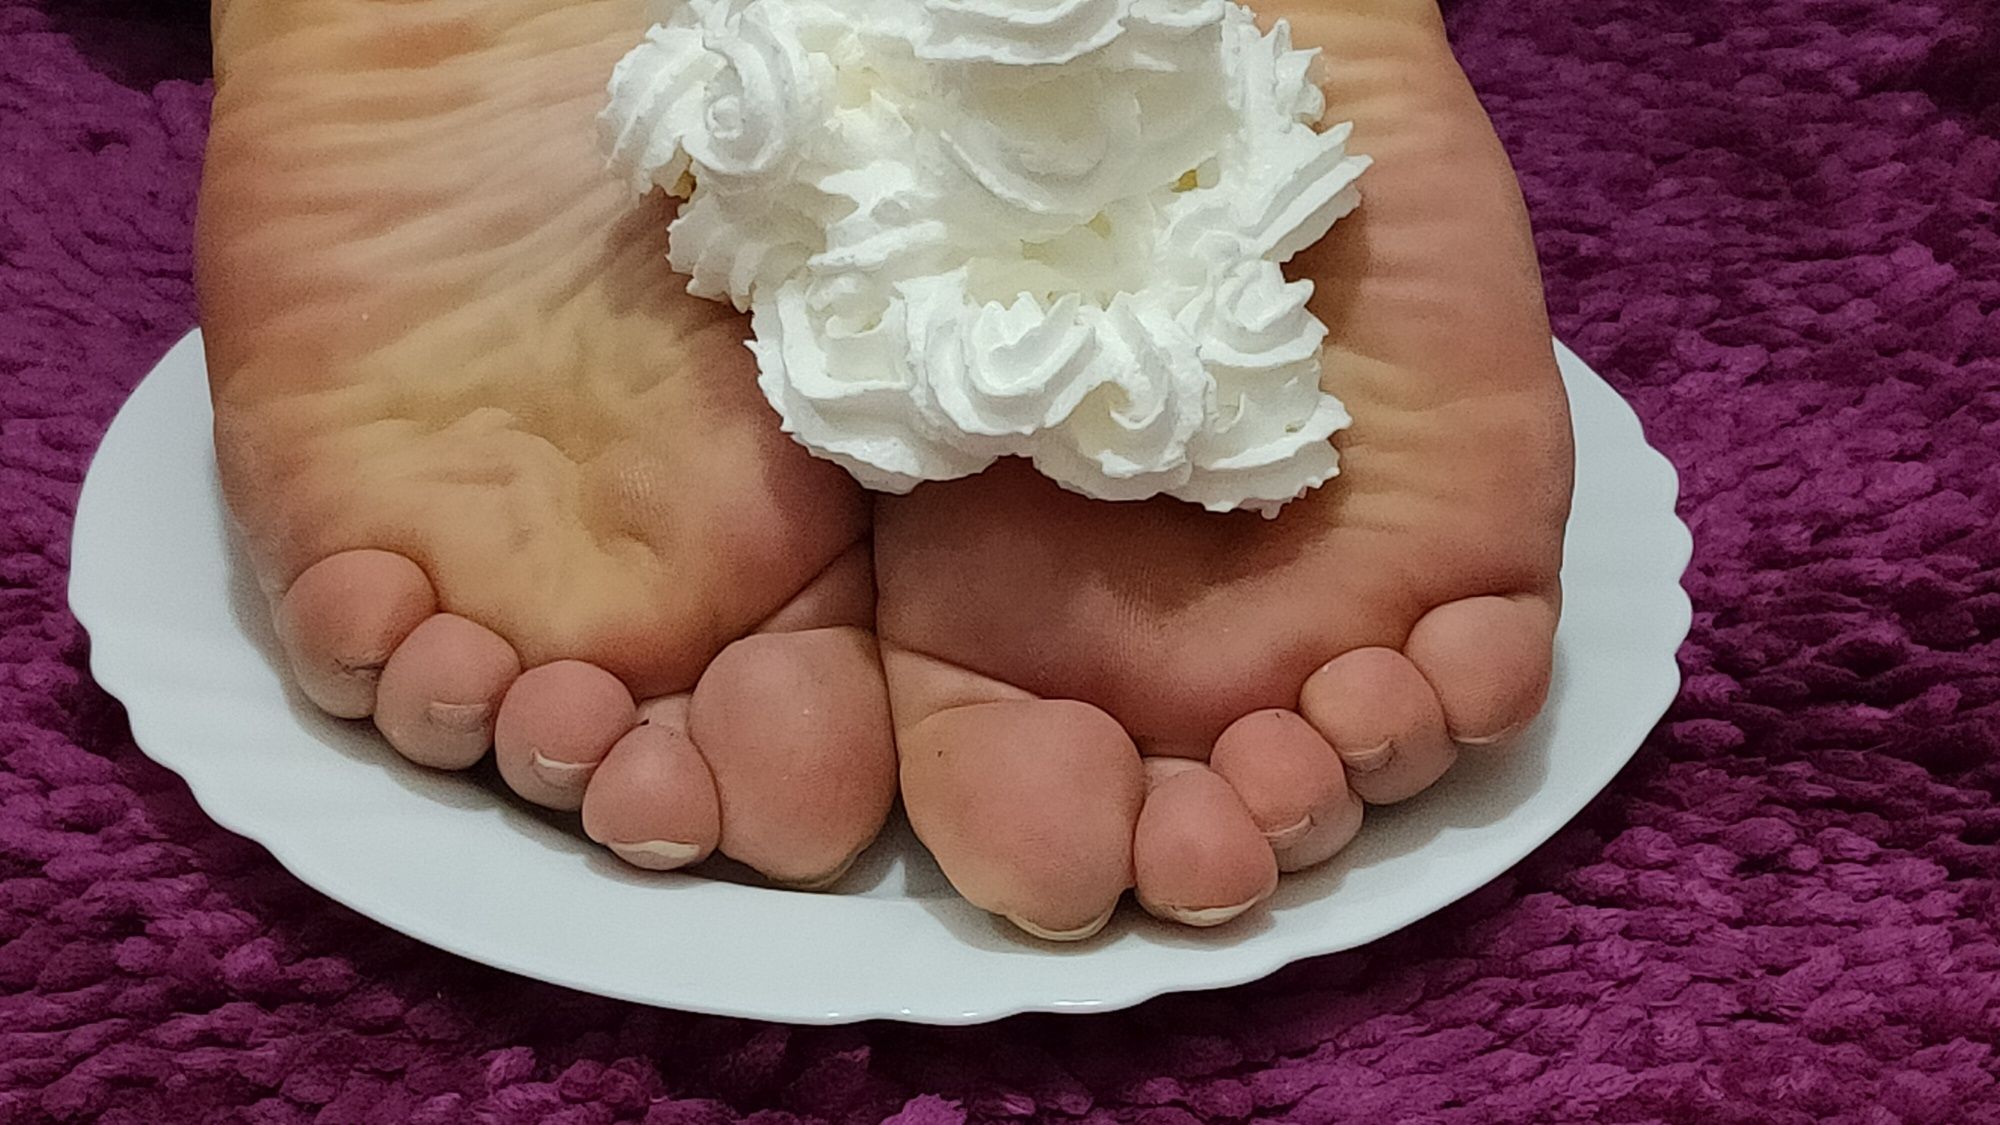 whipped cream on my feet